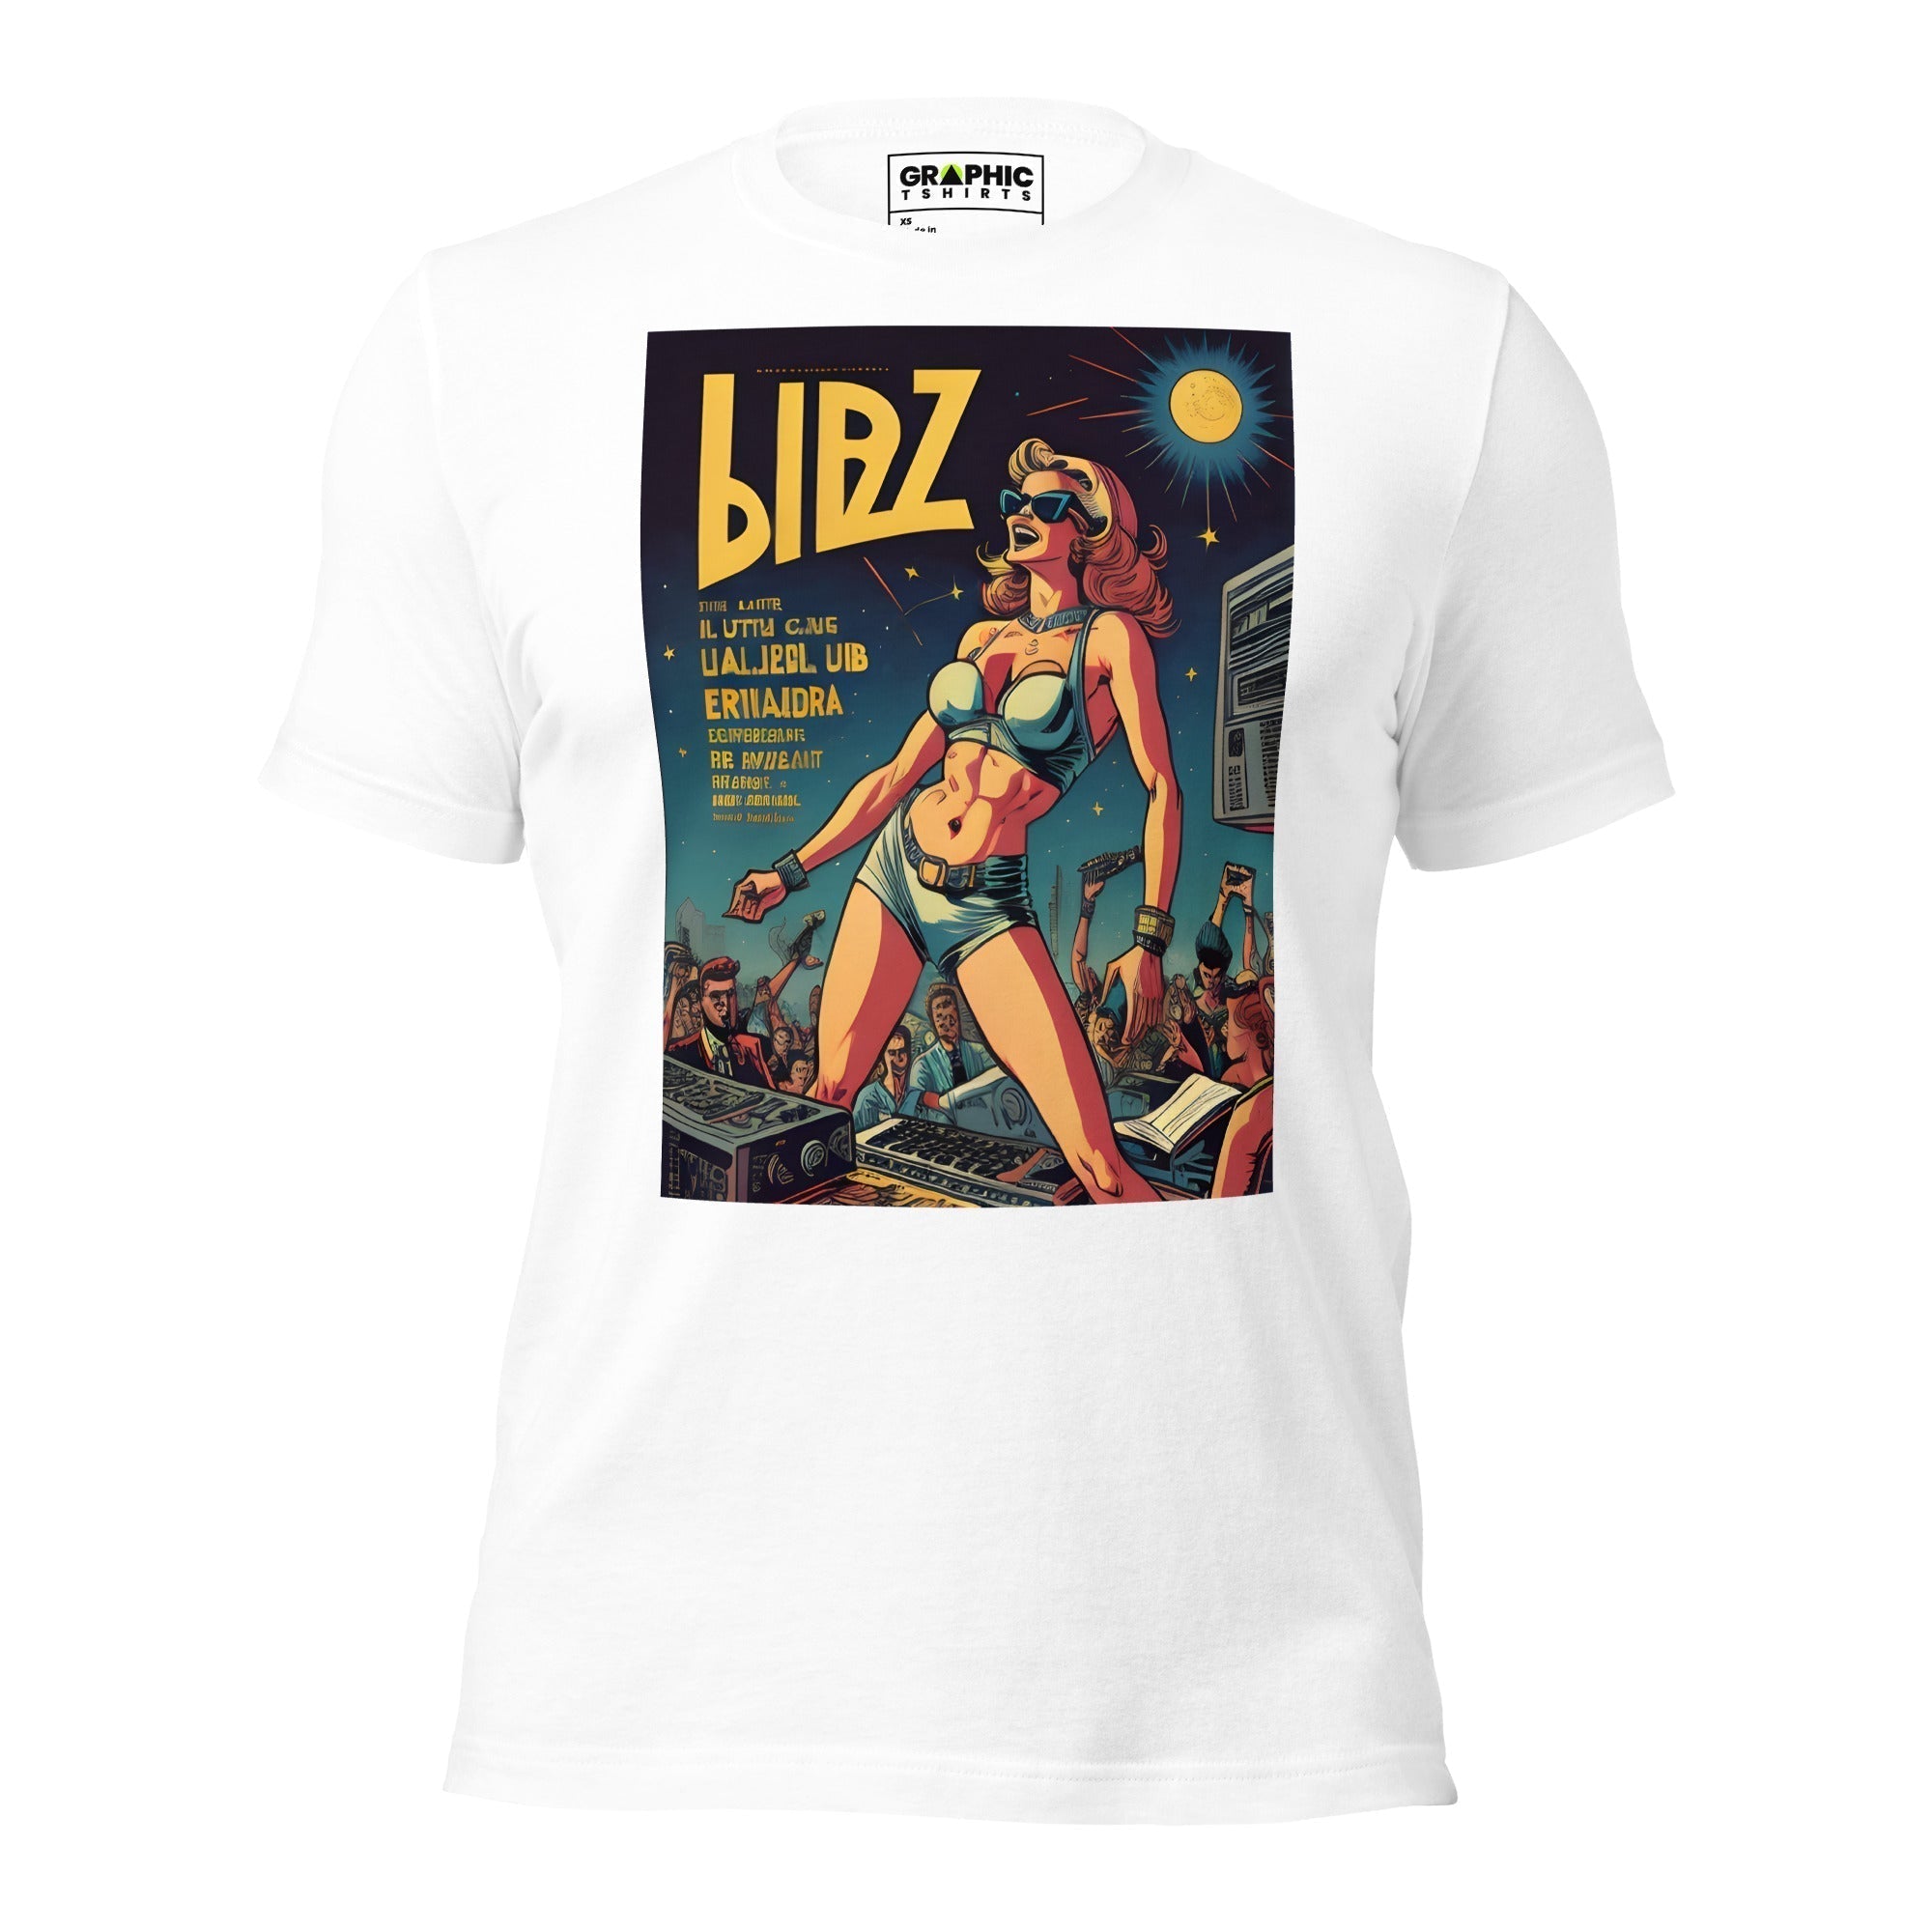 Unisex Crew Neck T-Shirt - Ibiza Night Club Heroes Comic Series v.30 - GRAPHIC T-SHIRTS